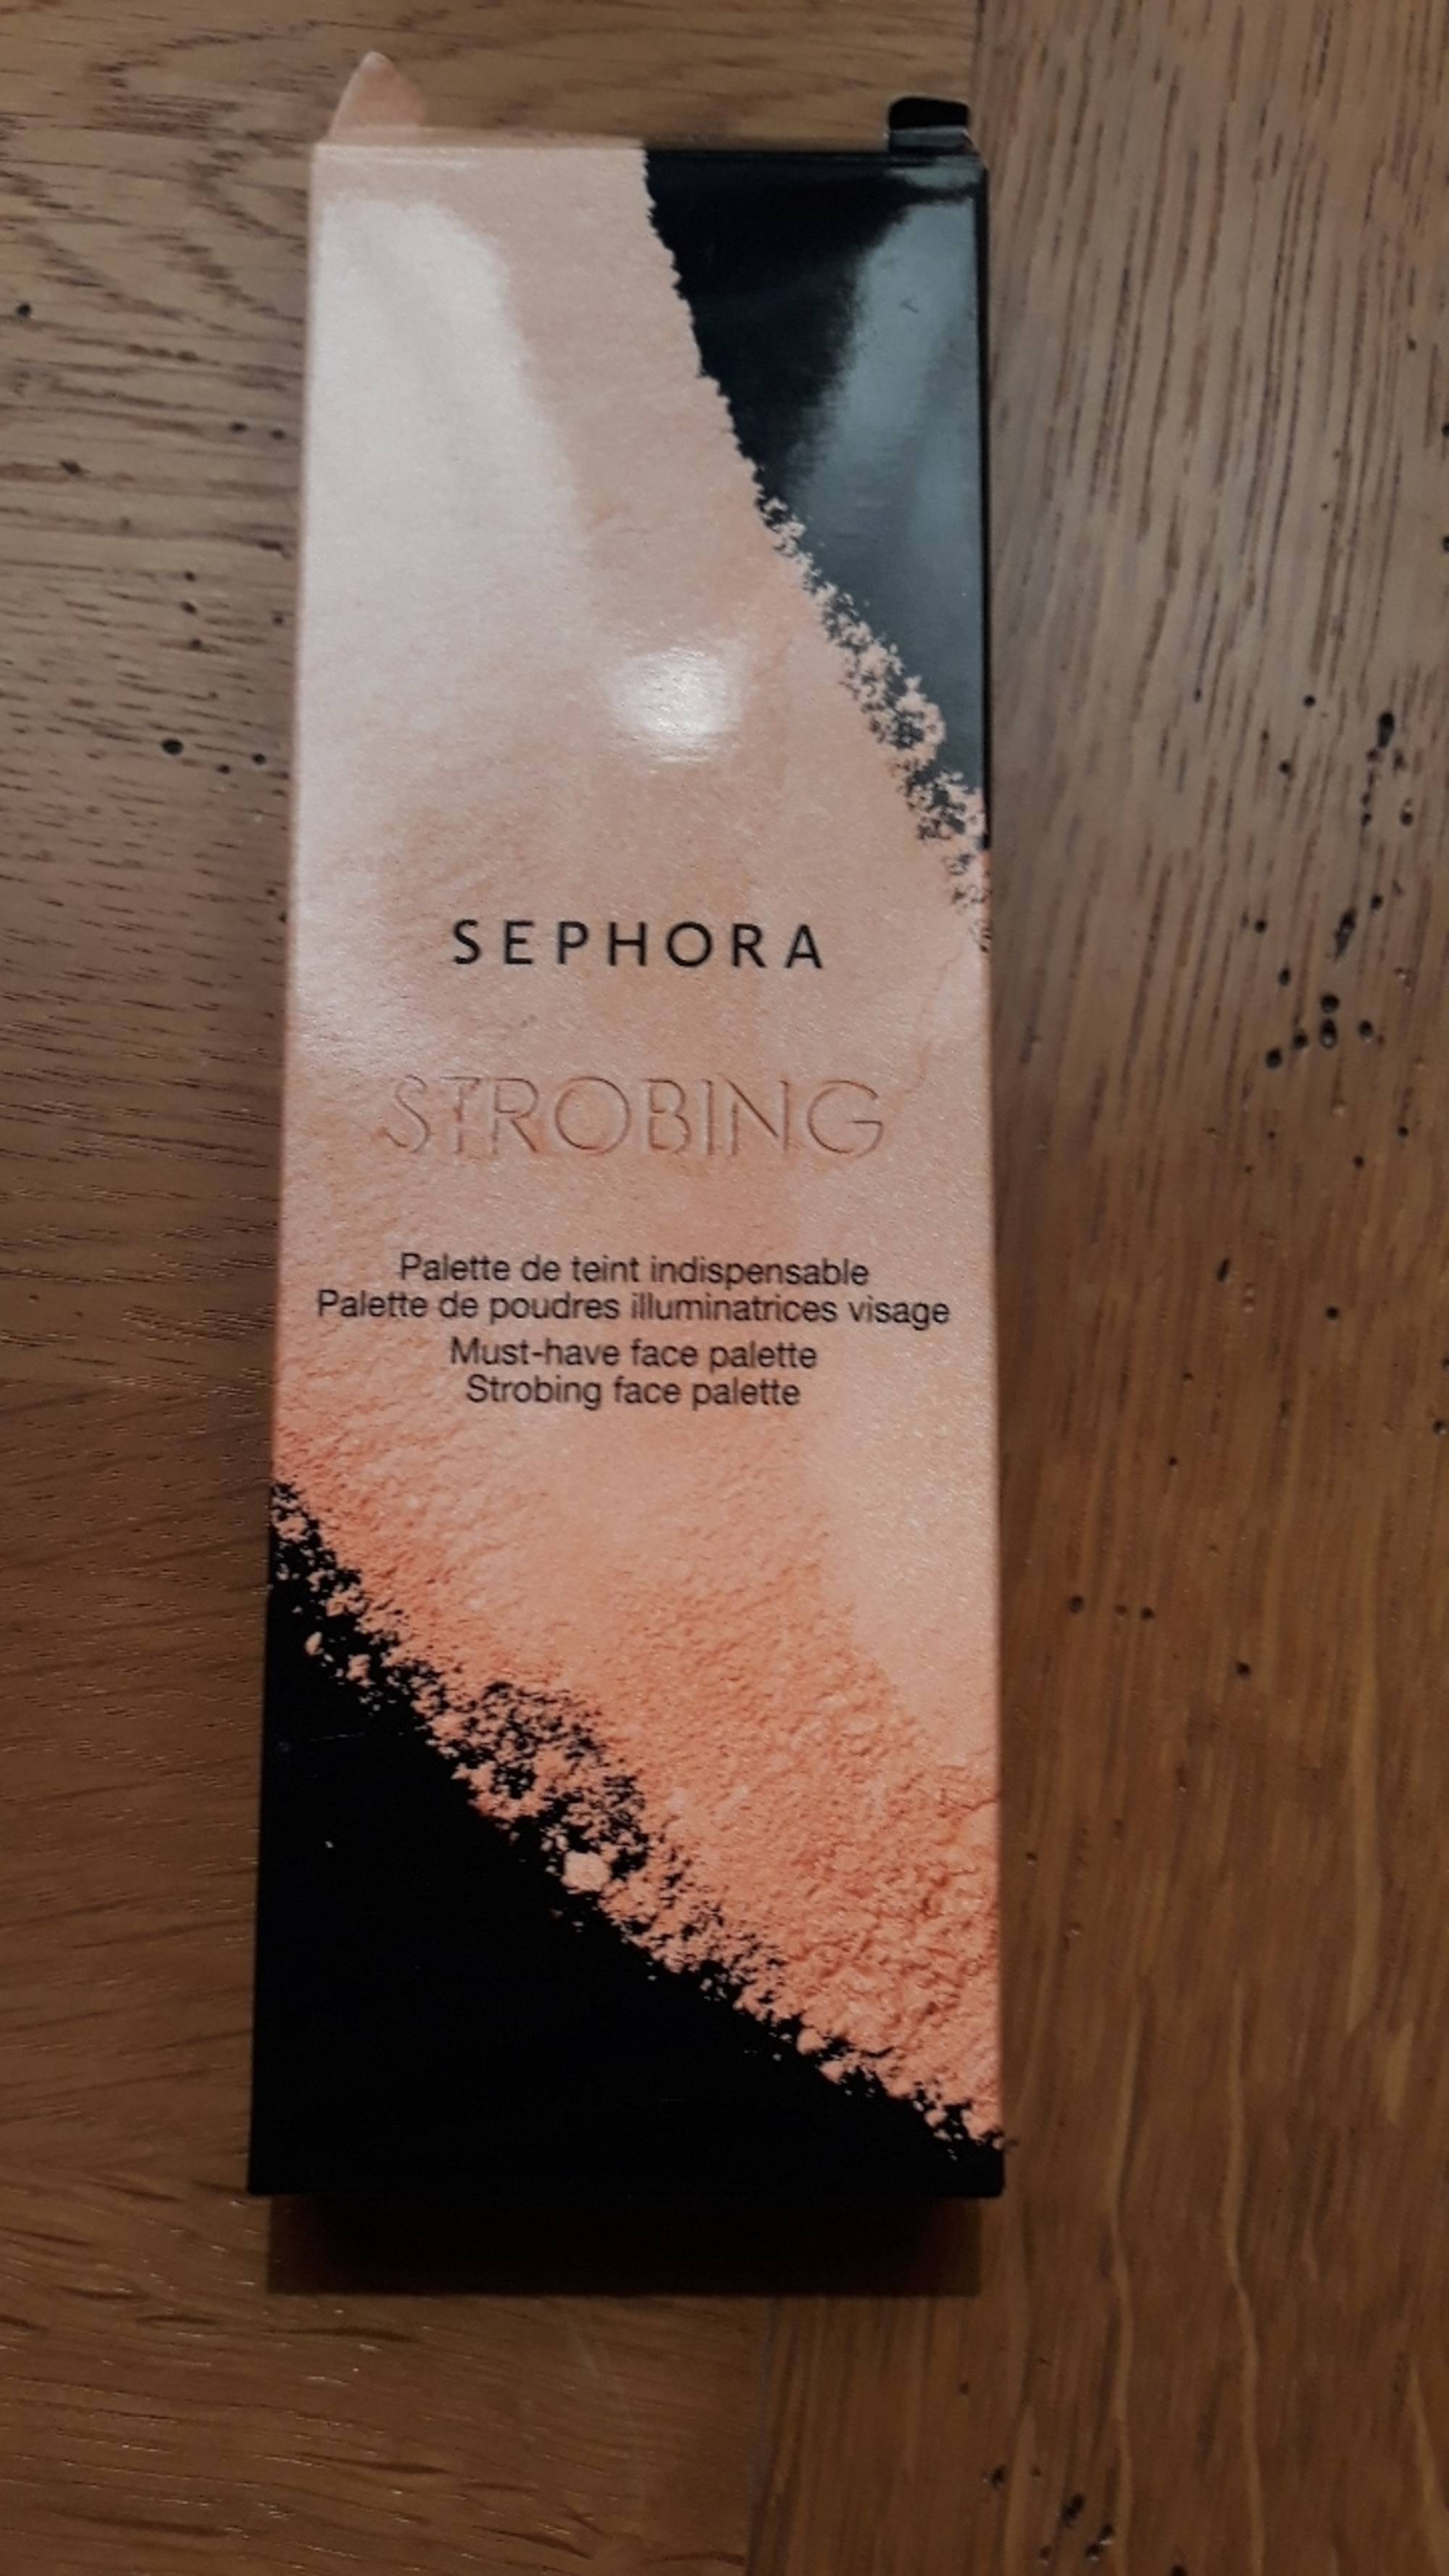 SEPHORA - Strobing - Palette de teint indispensable